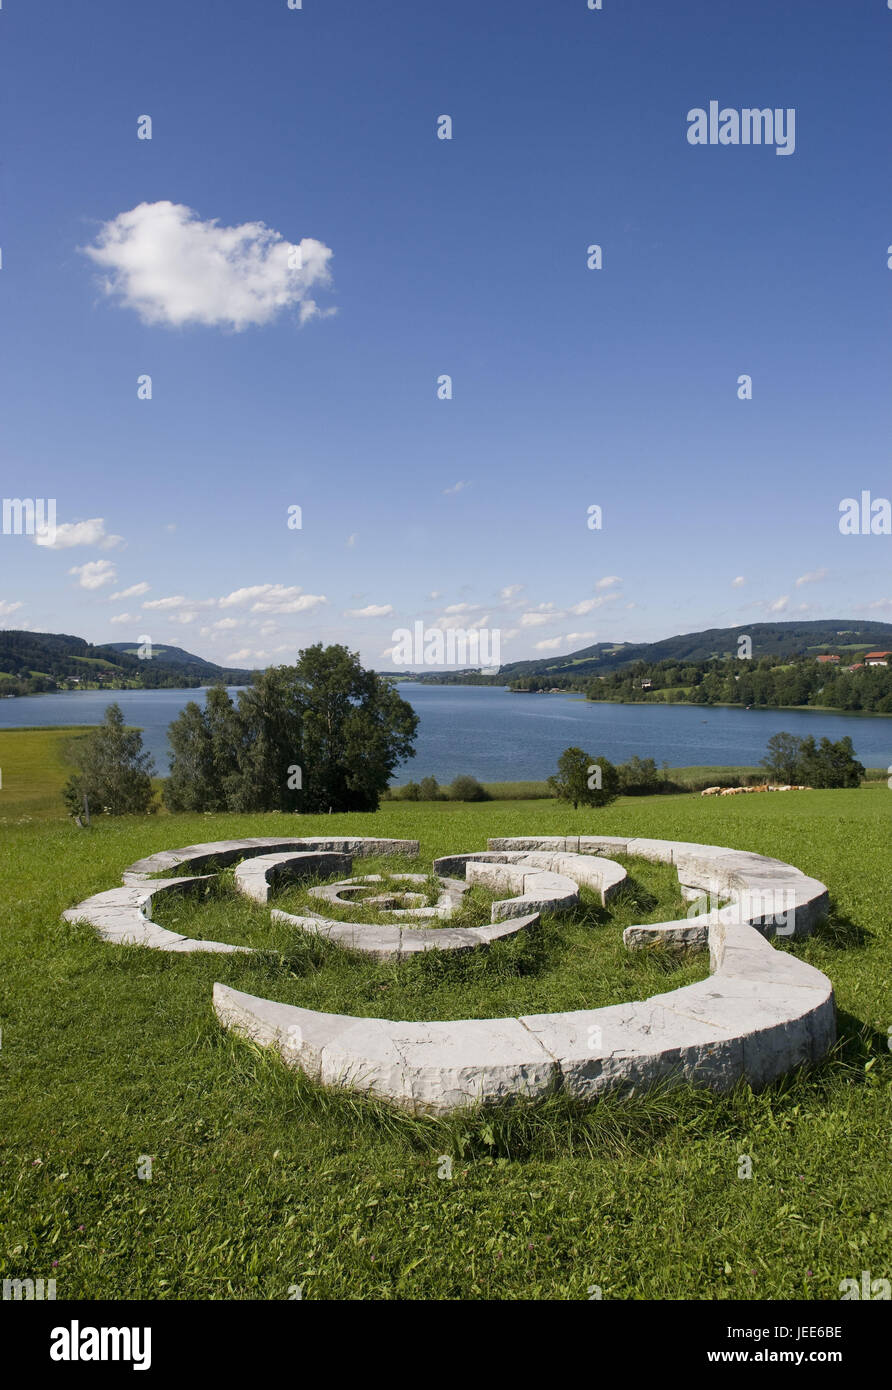 Austria, salt chamber property, crazy lake, stone sculpture, force space, Stock Photo